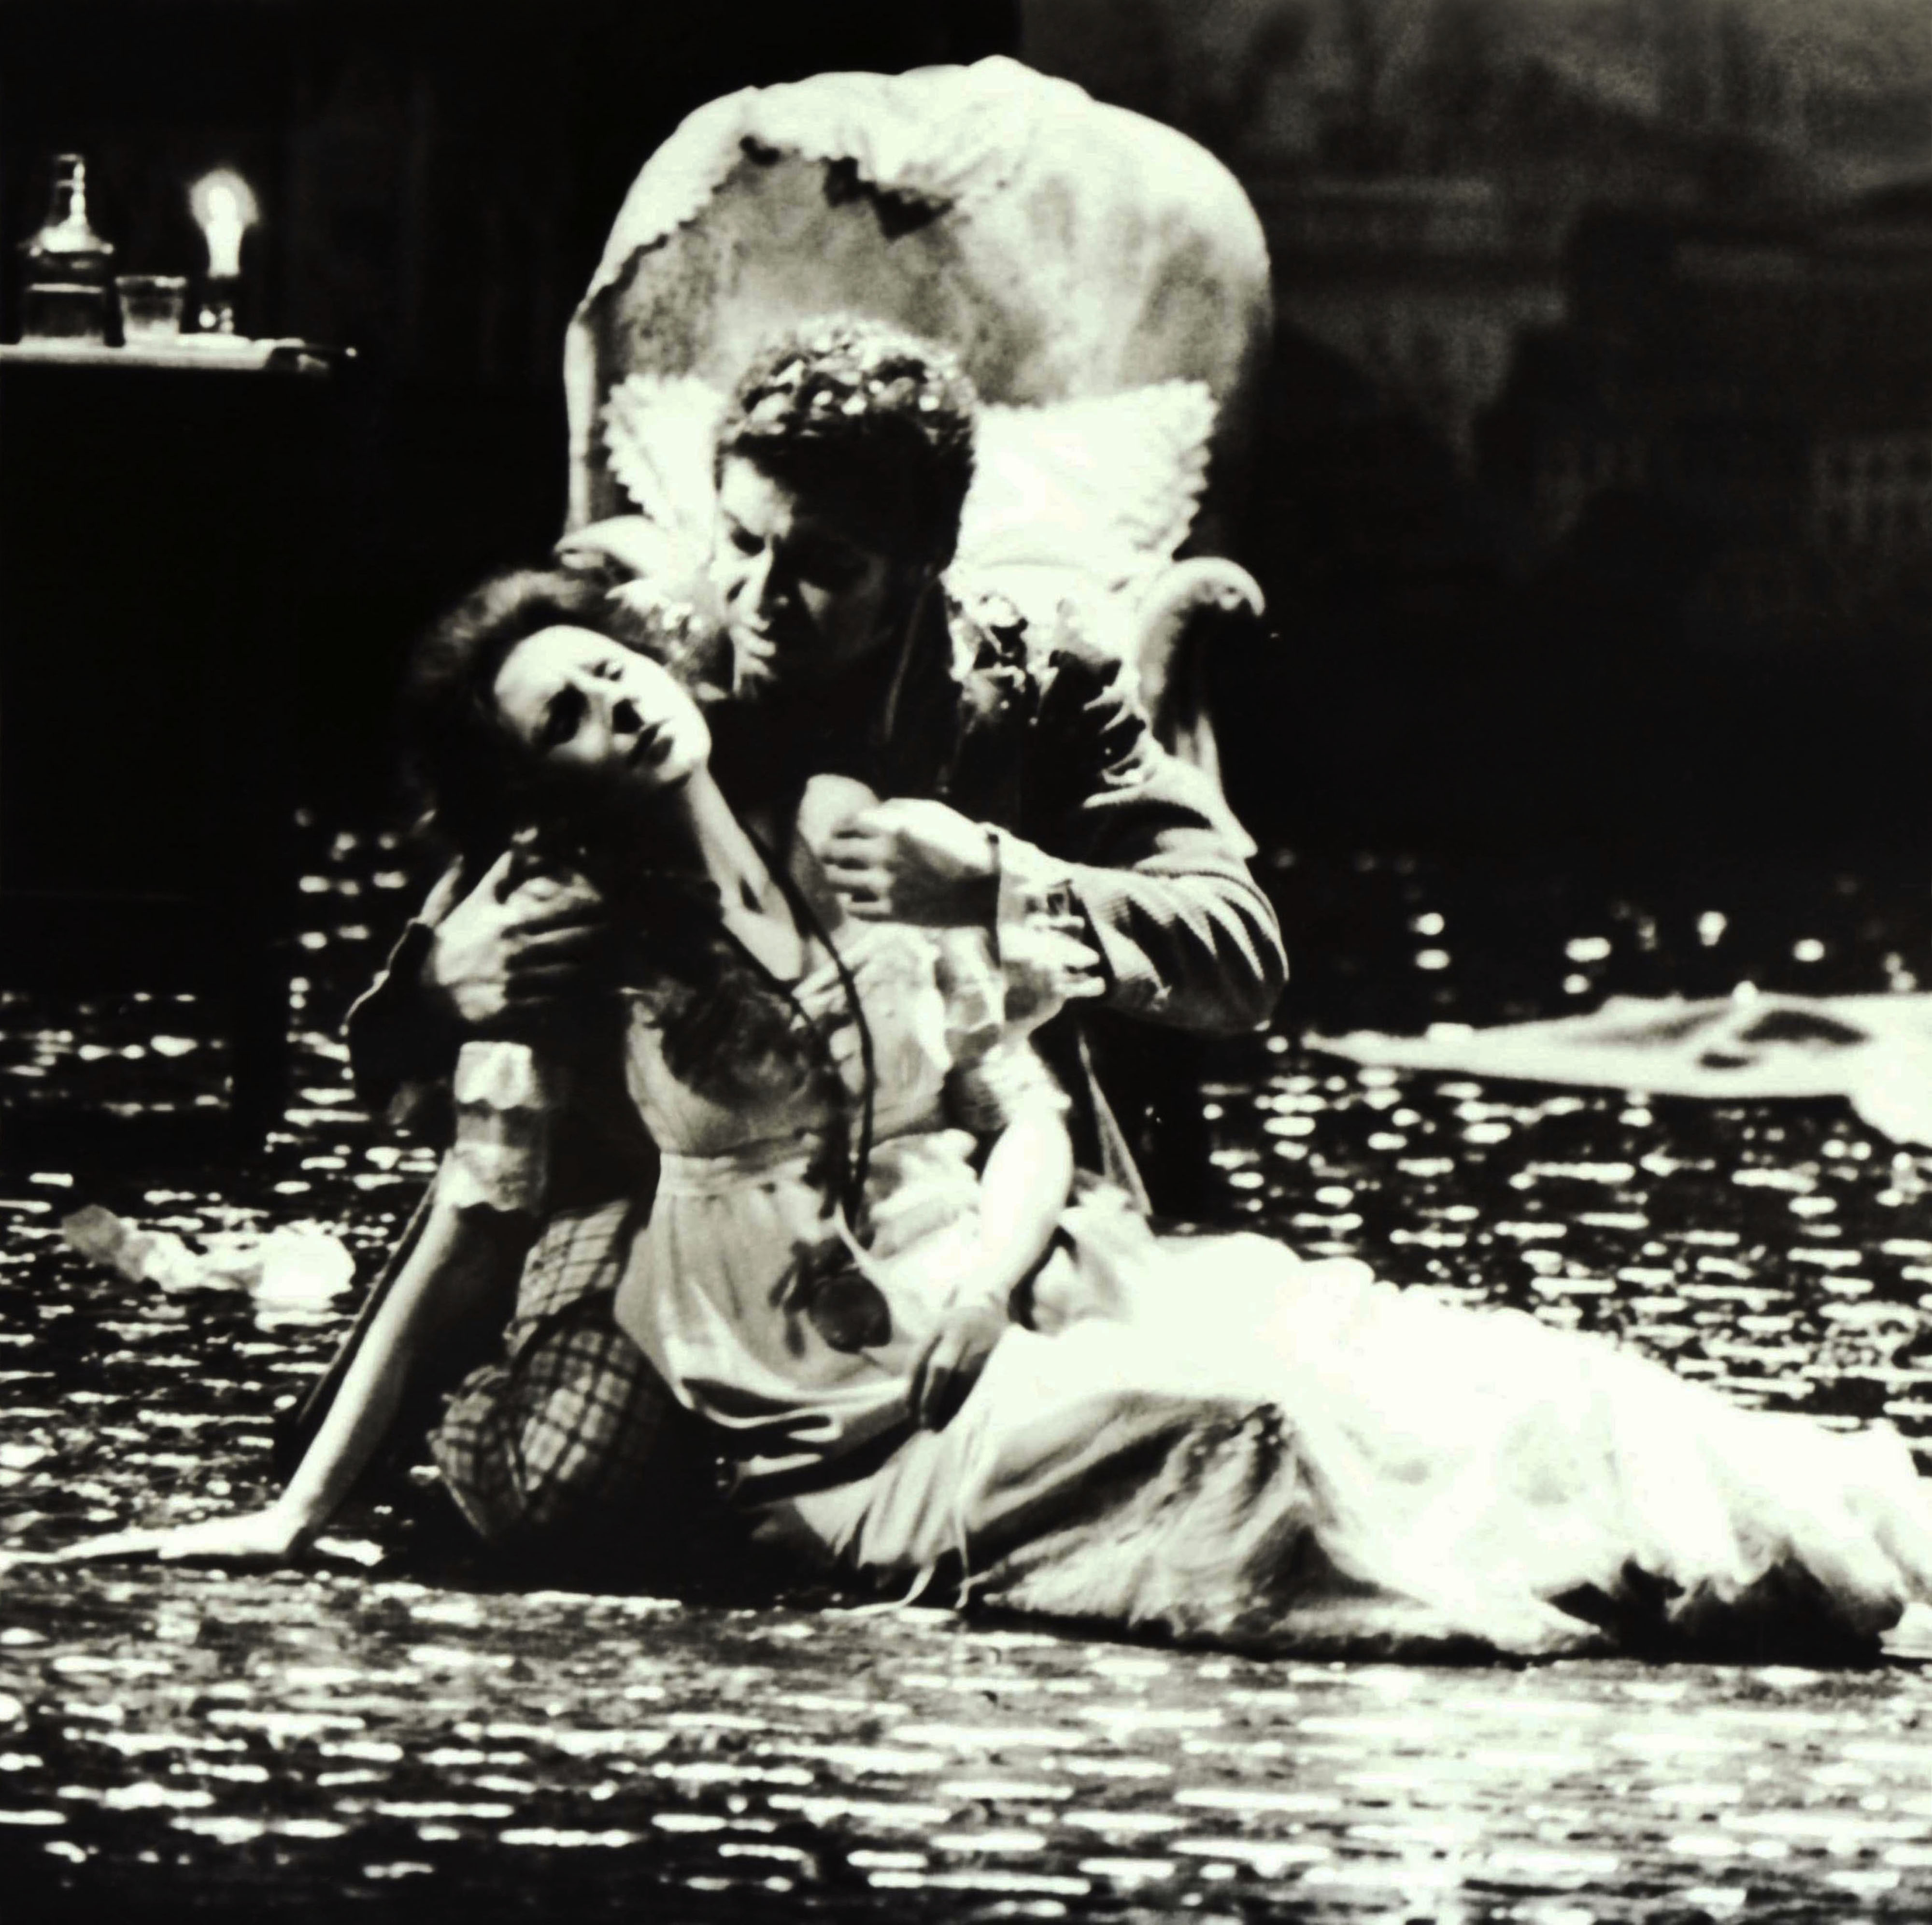 Lucia Aliberti with the Mexican tenor Francisco Araiza⚘Opernhaus Zürich⚘Zürich⚘Opera⚘"La Traviata"⚘On Stage⚘Photo taken from the TV News⚘TV Portrait⚘Video⚘:http://www.luciaaliberti.it #luciaaliberti #franciscoaraiza #opernhauszurich #zurich #opera #latraviata #onstage #tvnews #tvportrait #video